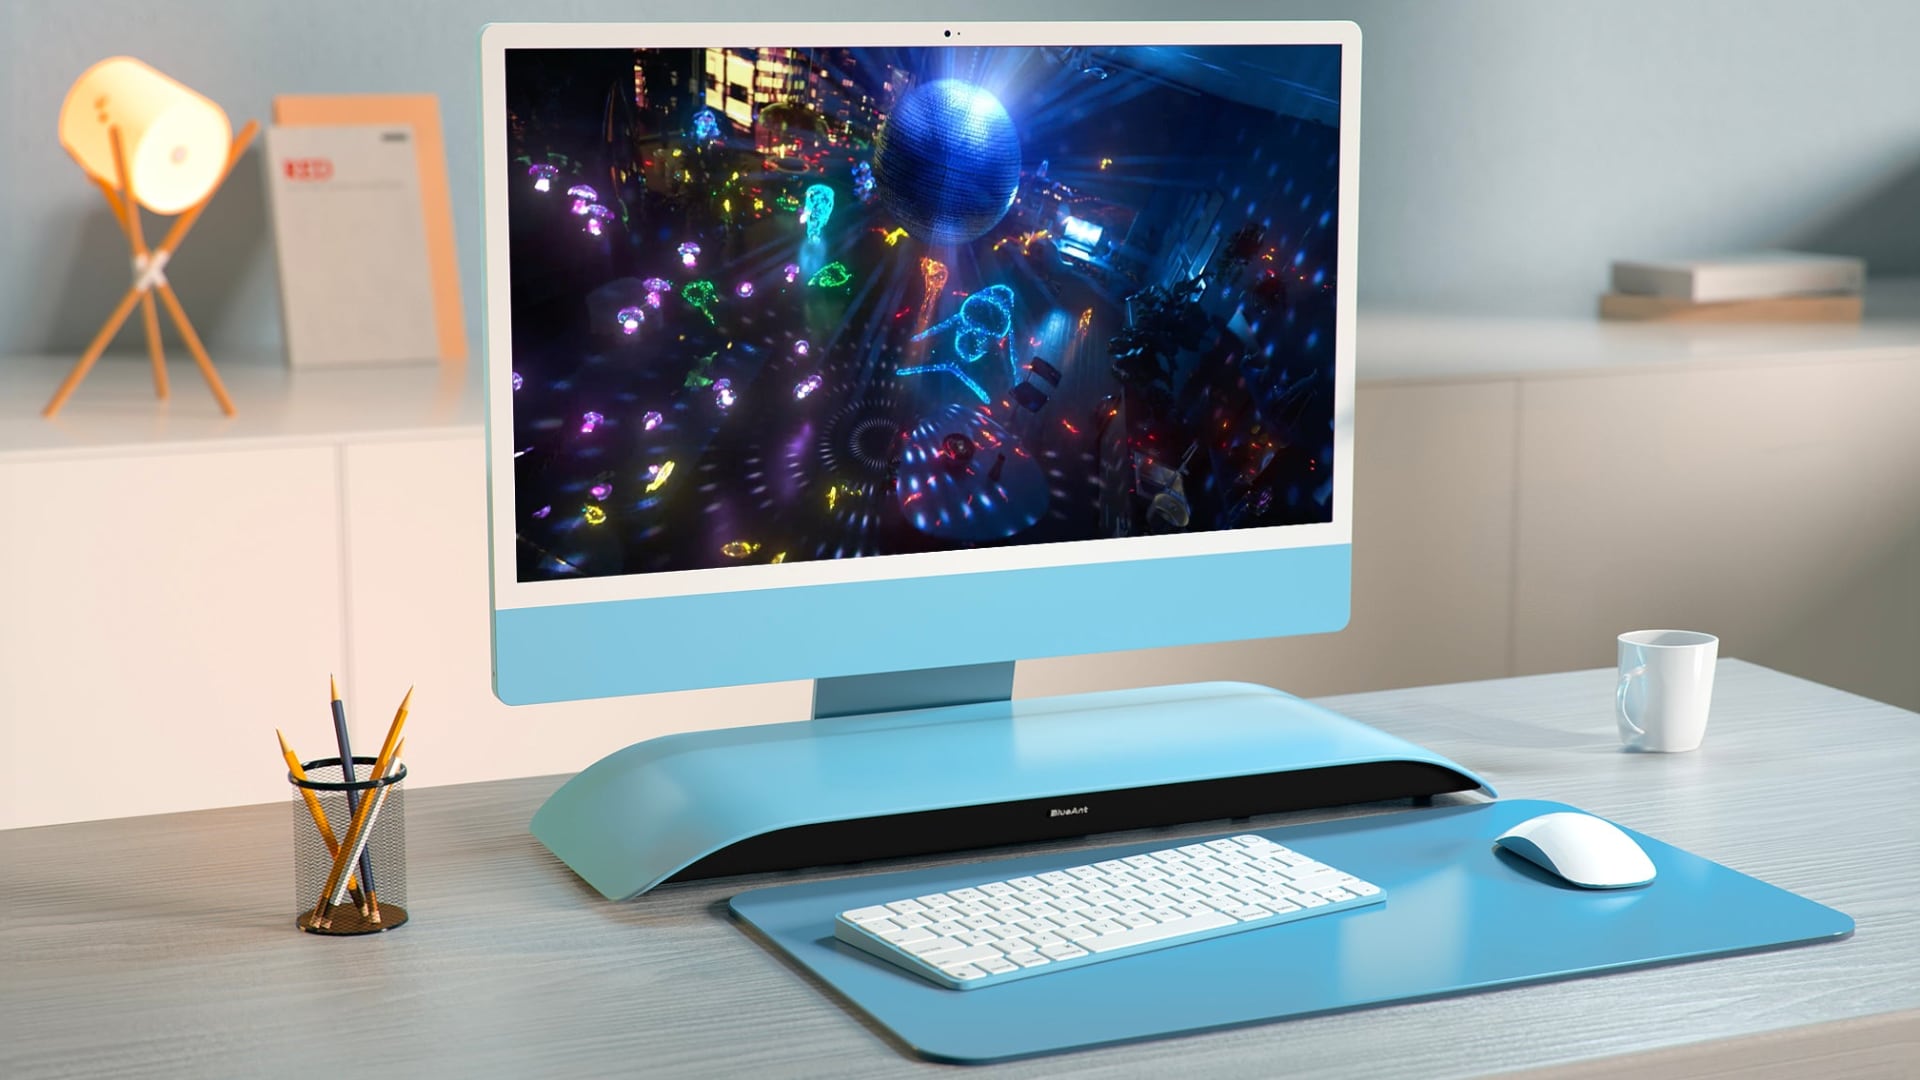 A modern work desk with a blue iMac and a color-matched Soundblade soundbar beneath it.